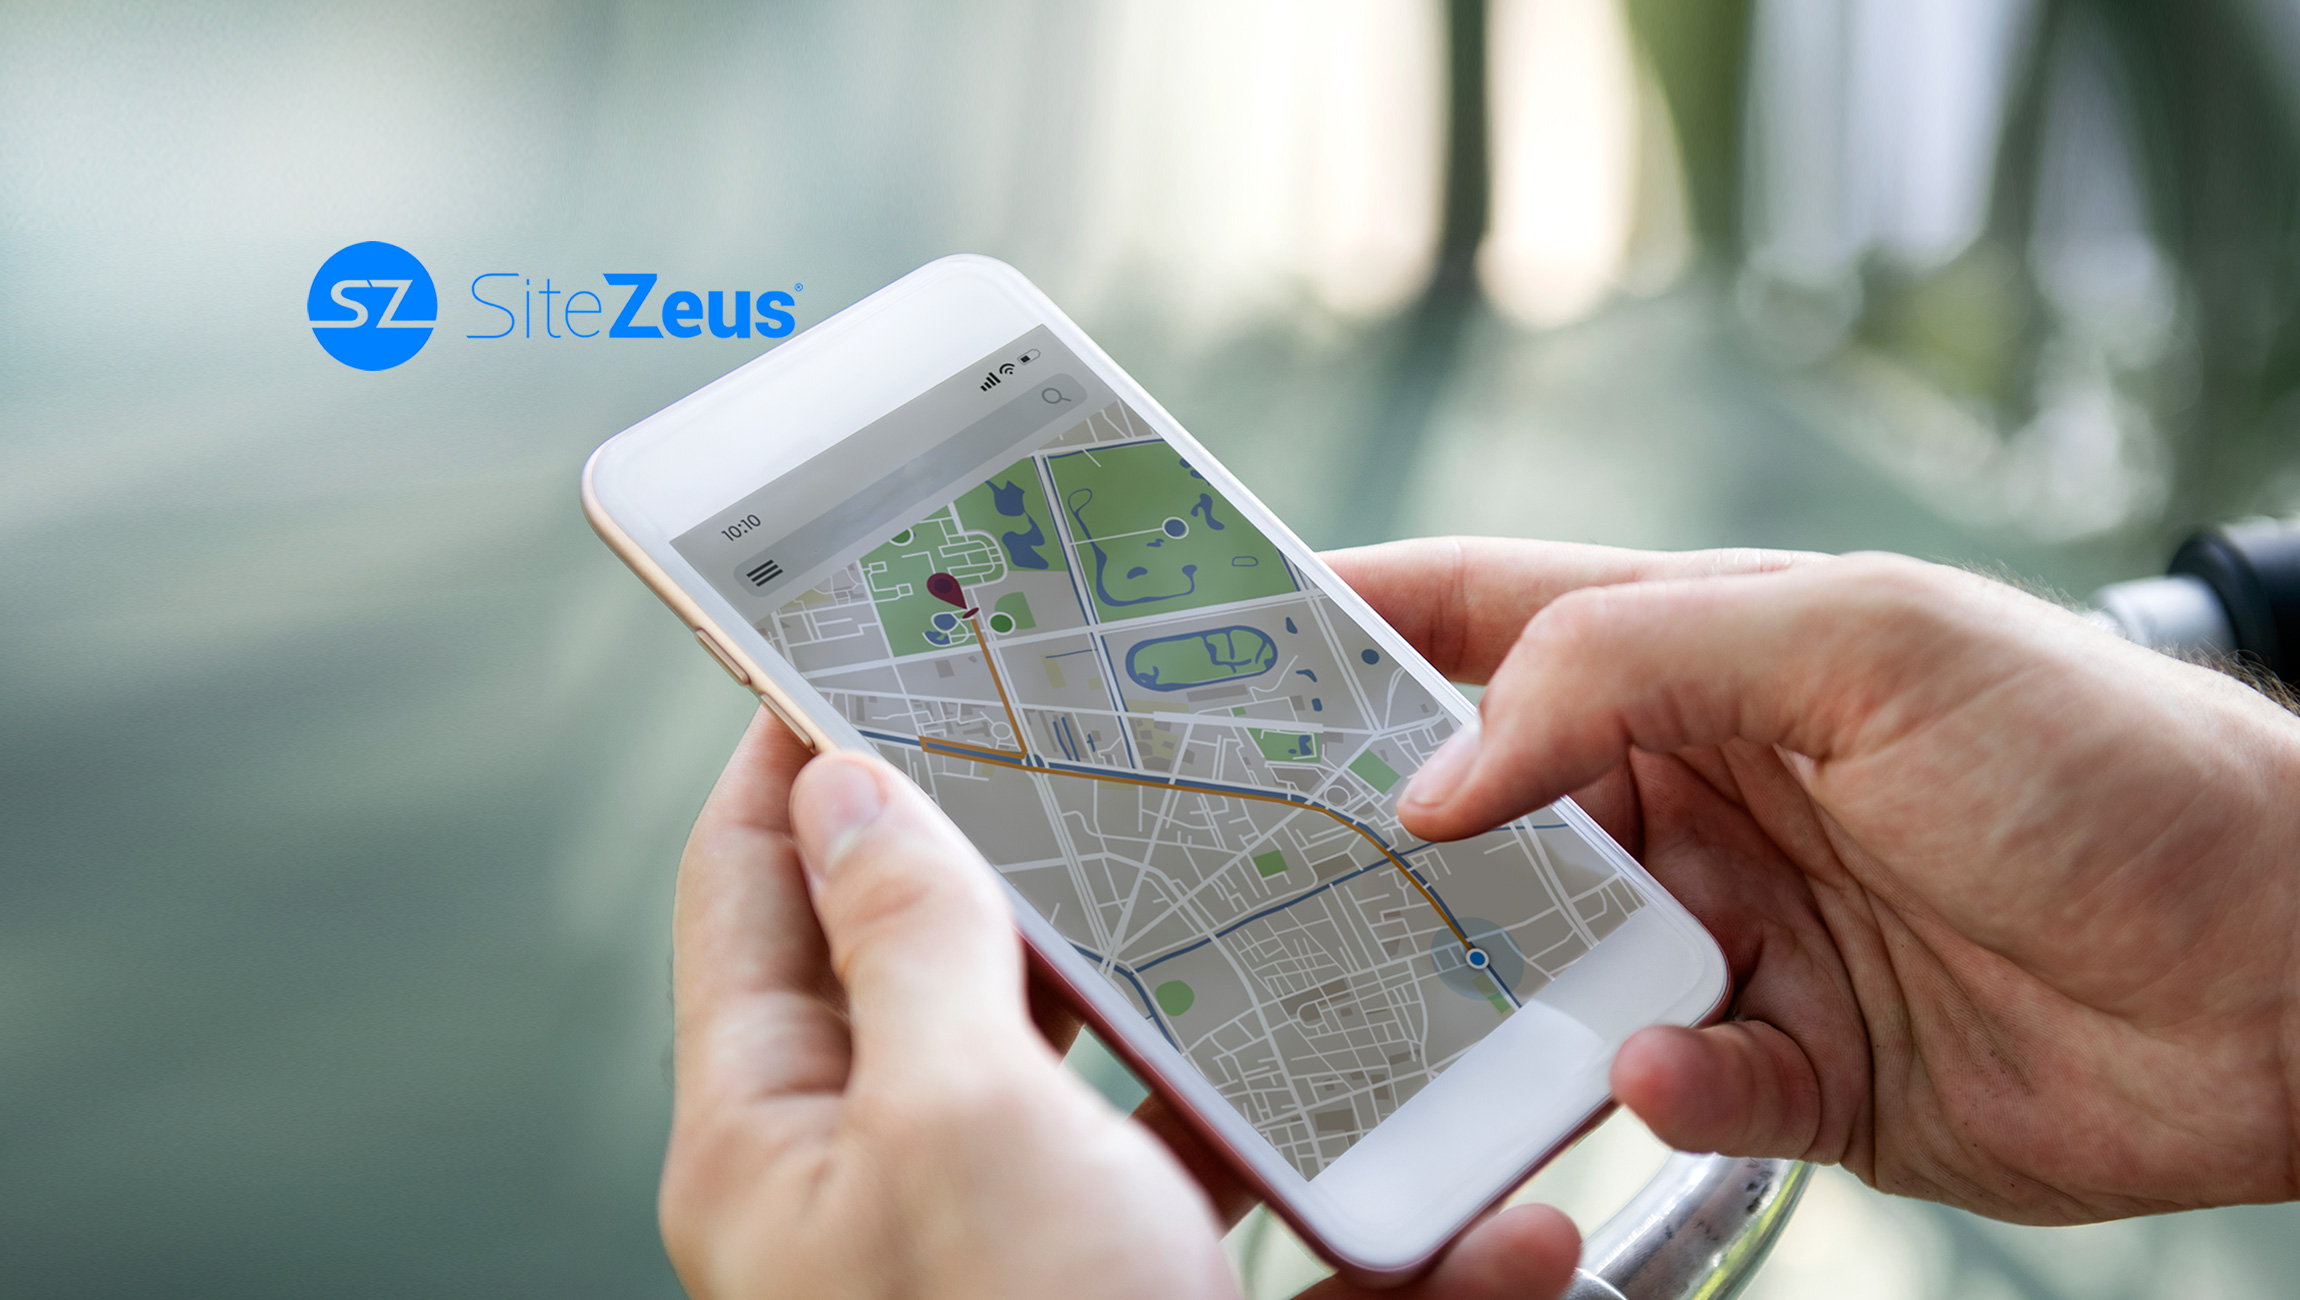 Location Intelligence Meets Decision Technology: SiteZeus Leads Shift into New Prescriptive-Led Growth Era